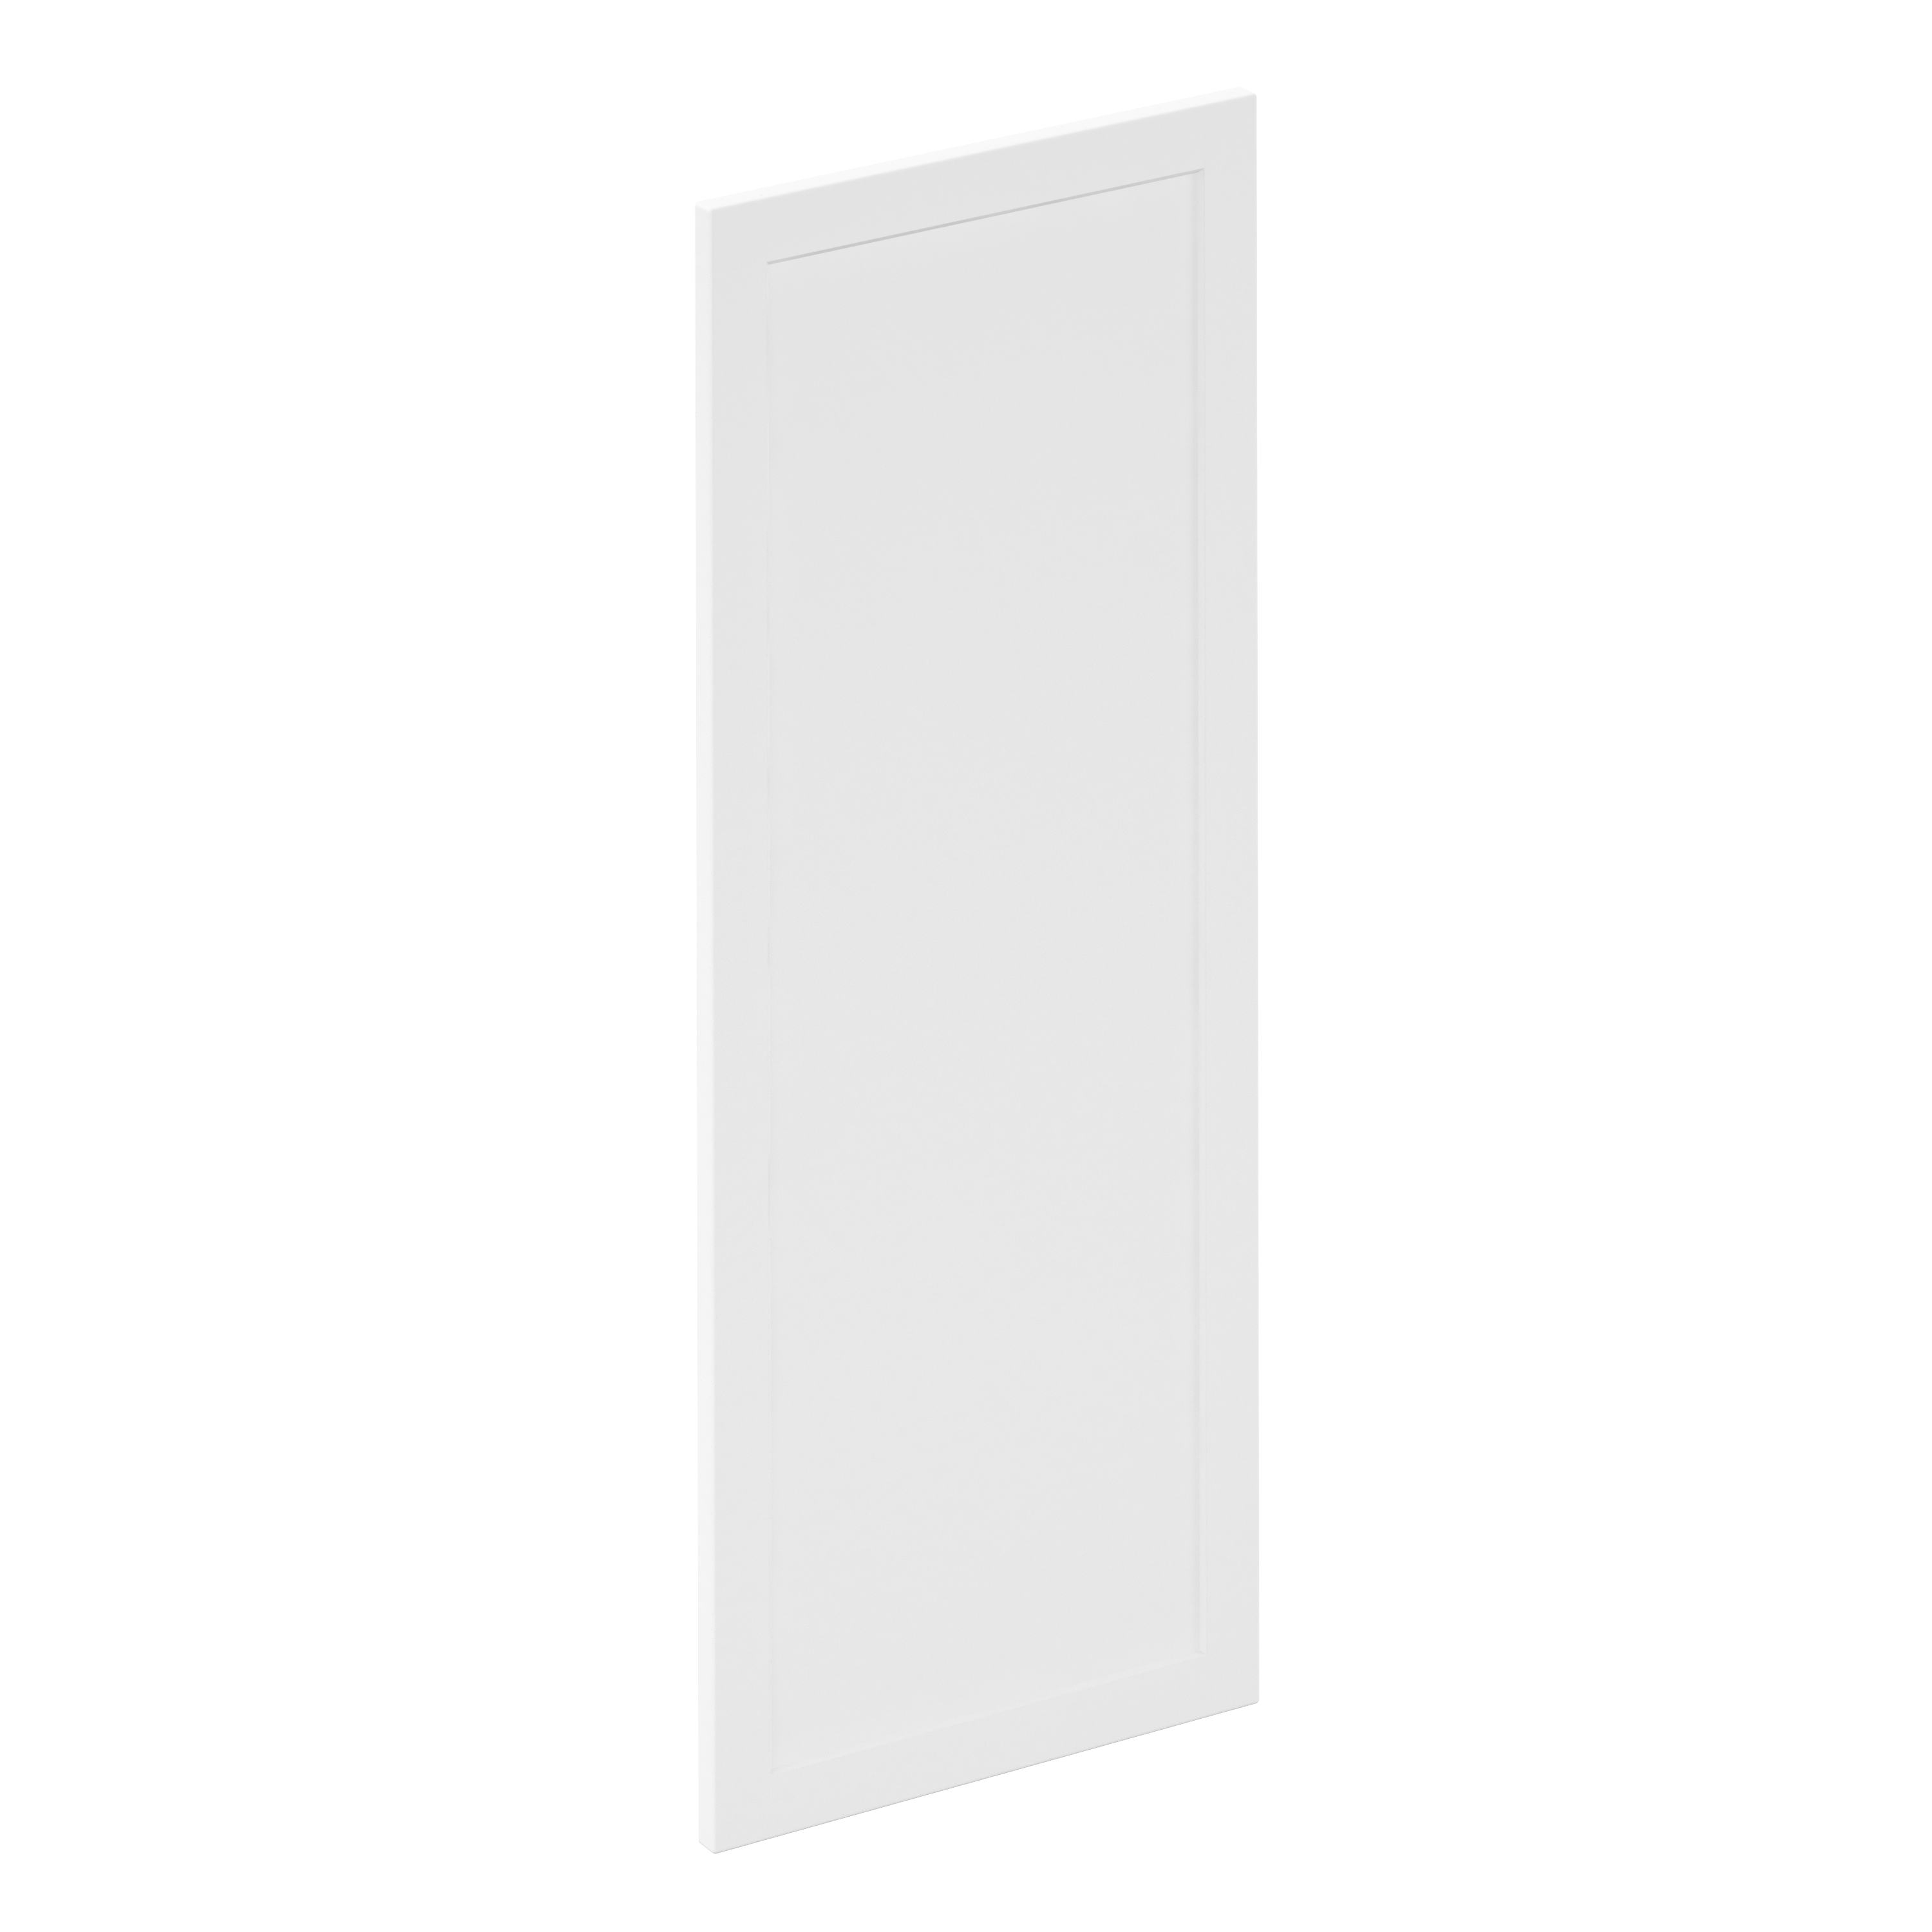 Puerta para mueble de cocina newport blanco mate h 102.4 x l 40 cm